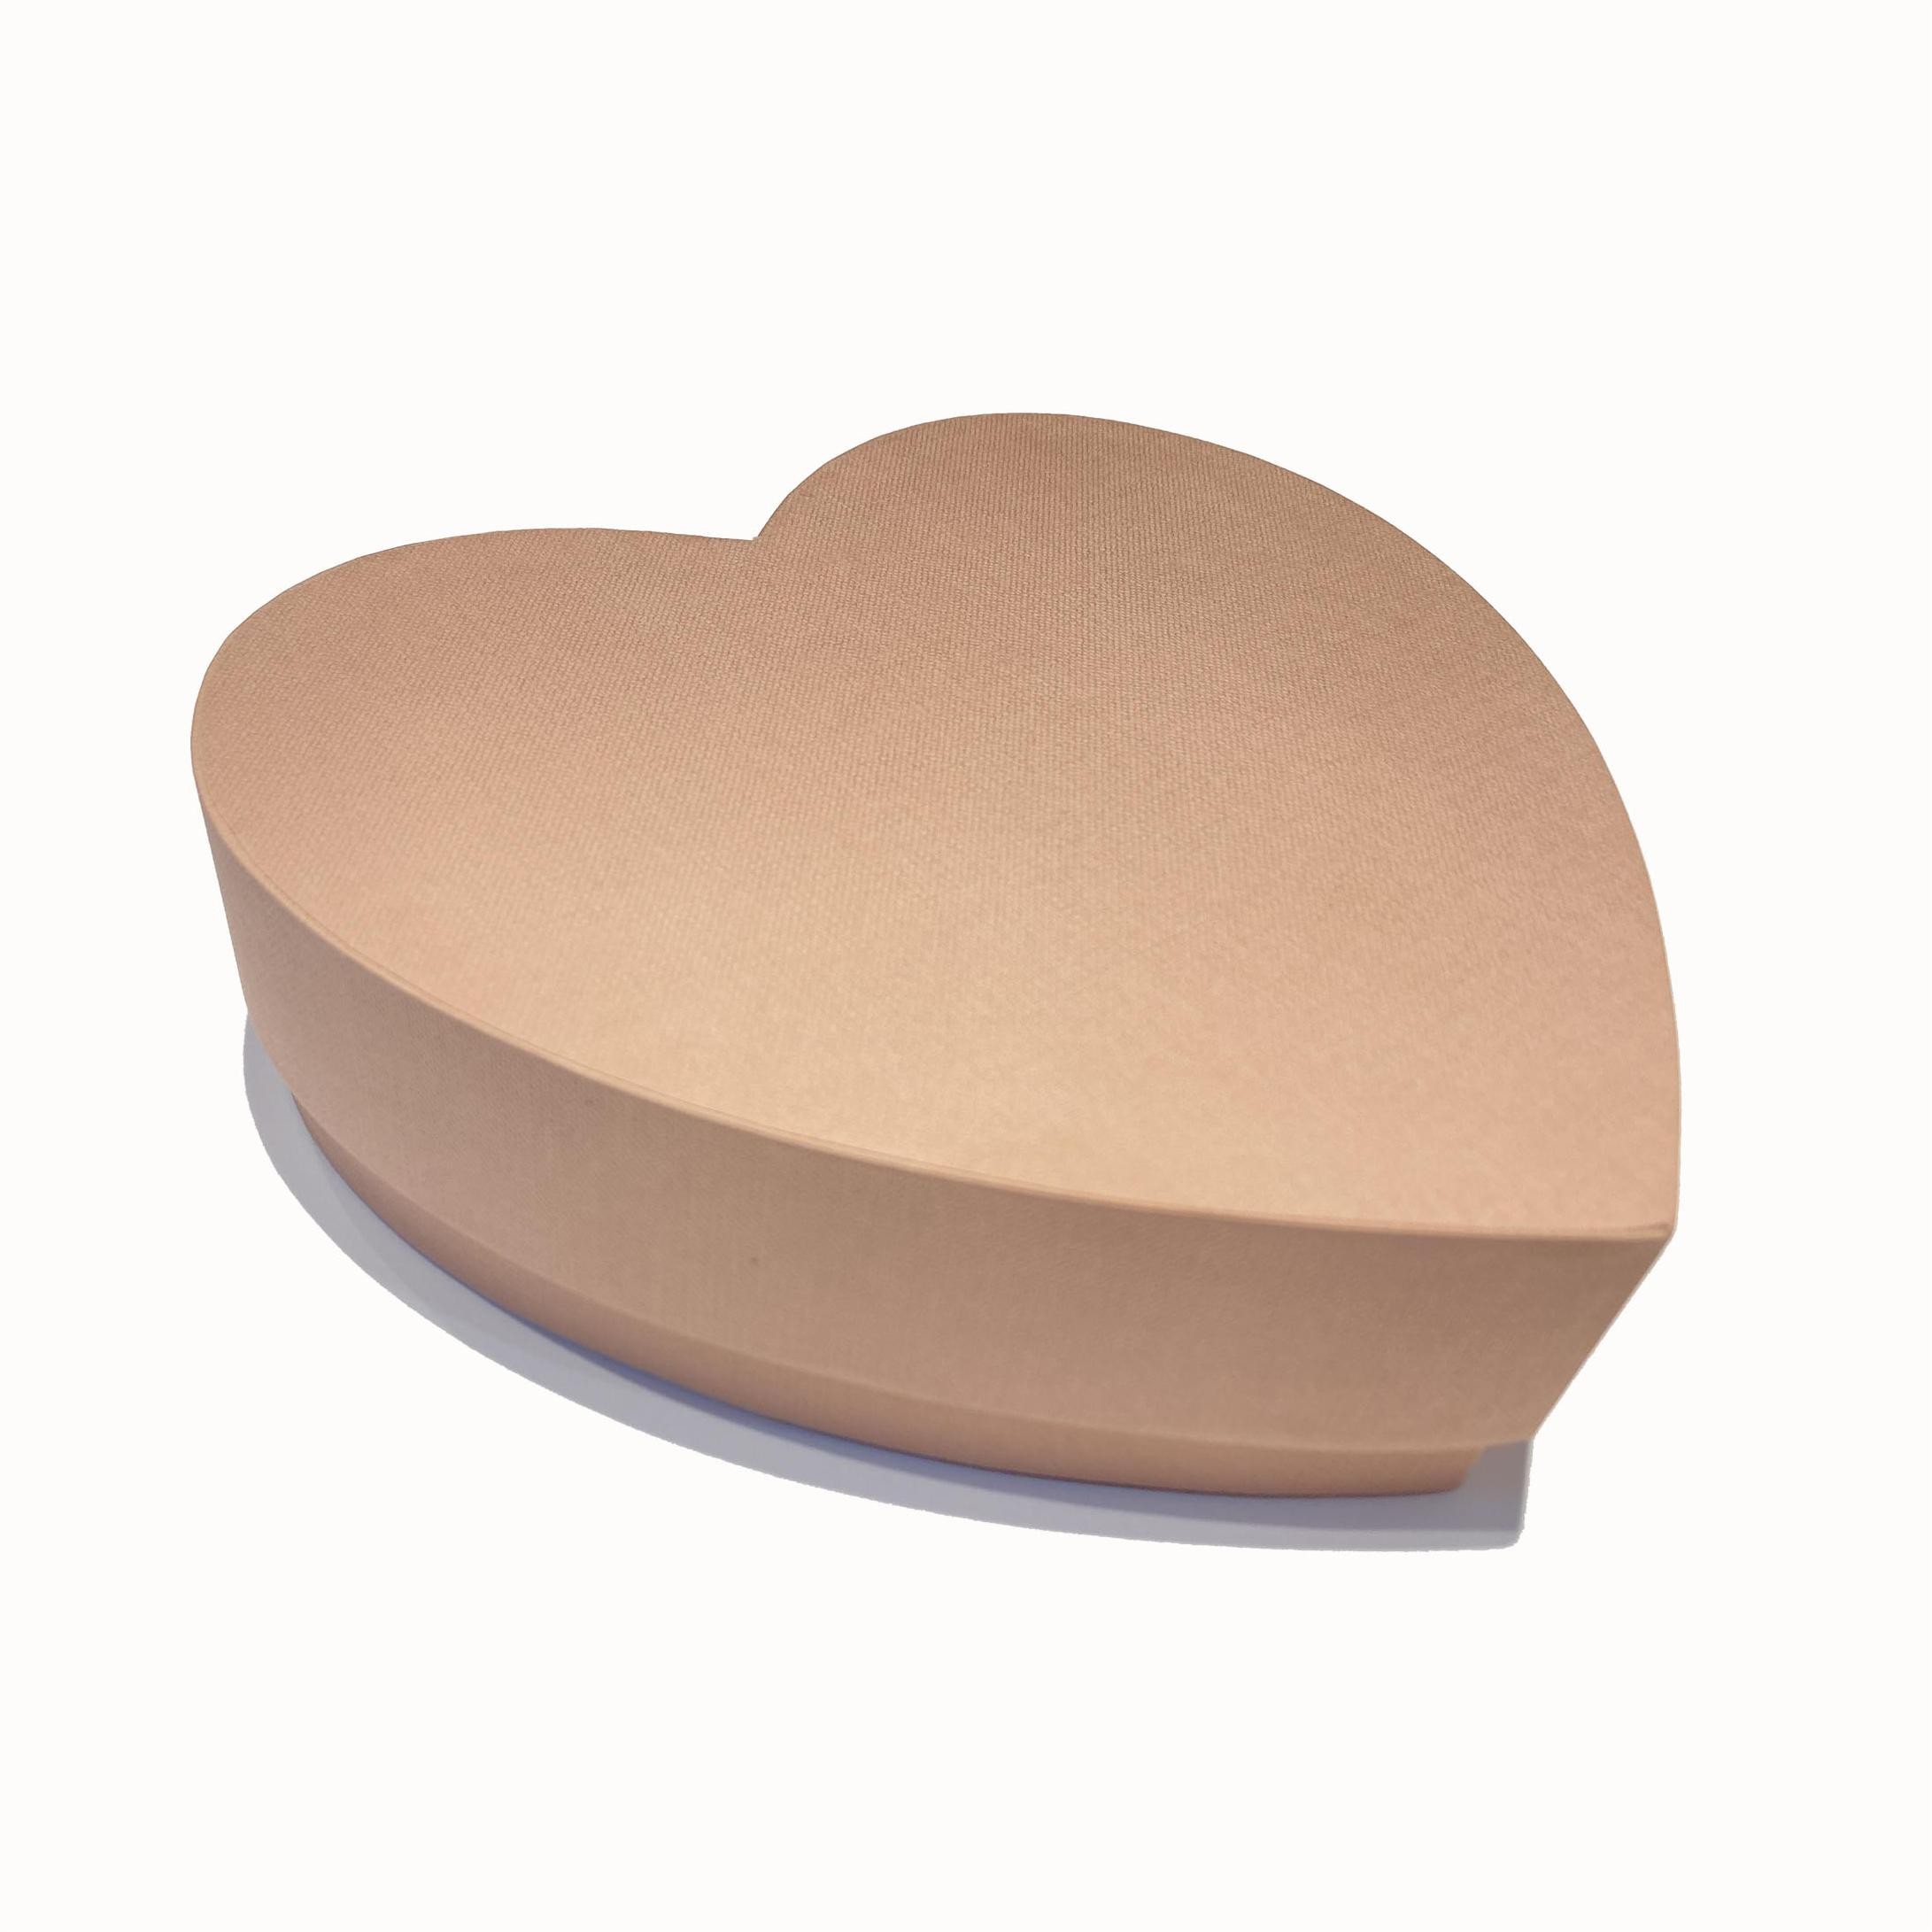 Heart shaped chocolate box Advanced custom packaging